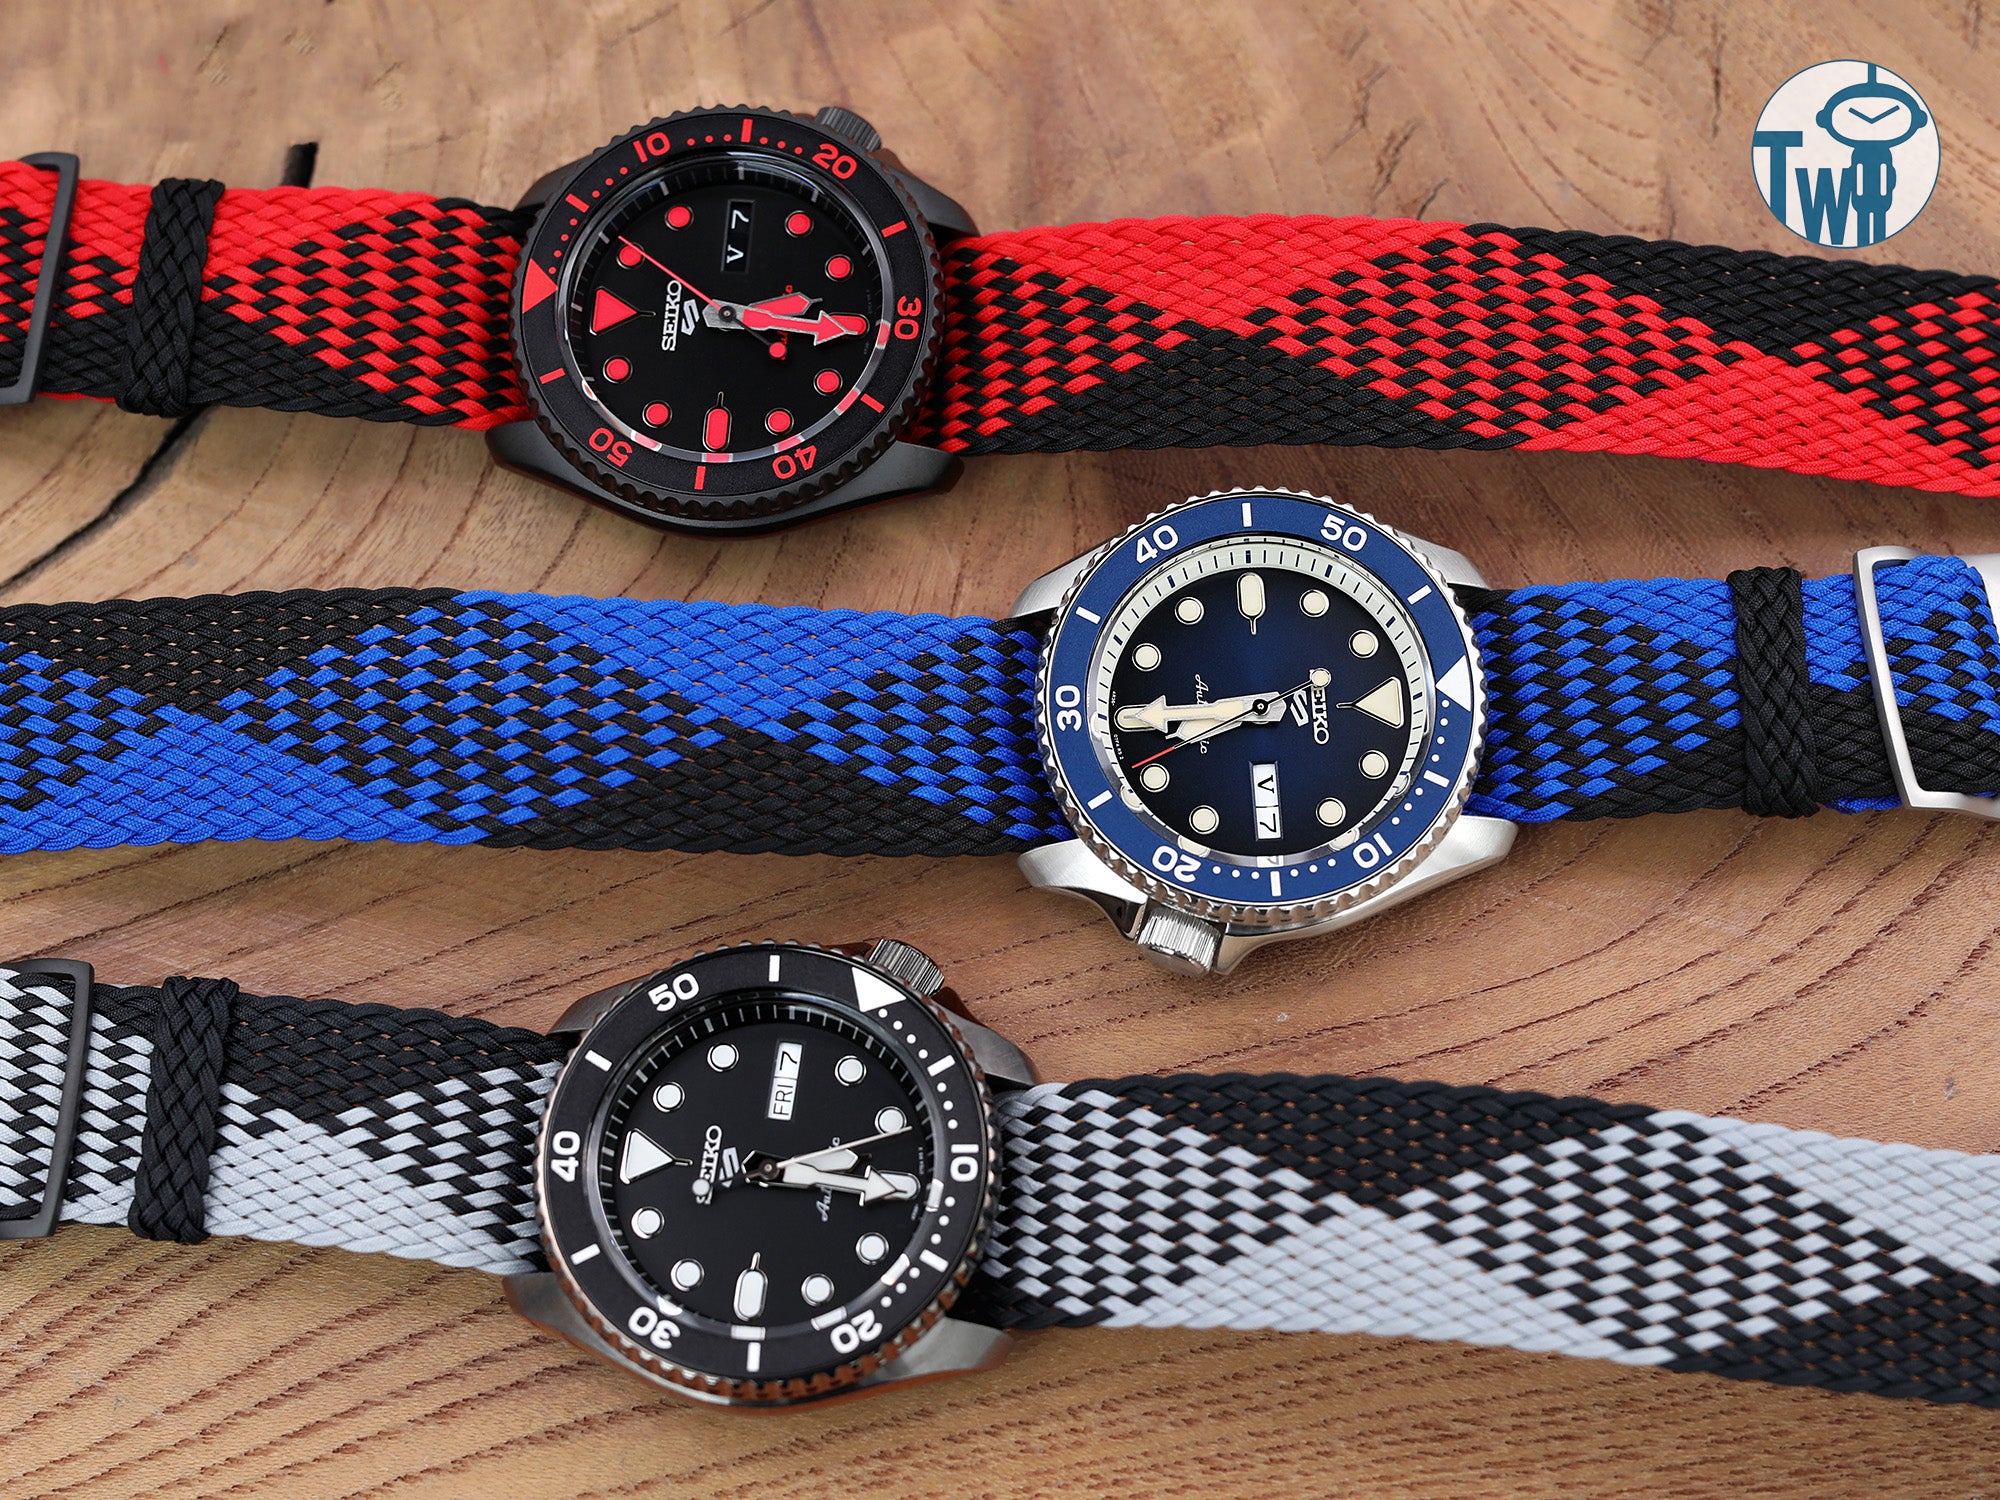 Seiko精工 5 Sports系列的三款腕錶SRPD83K1黑色 / 紅色、SRPD71K2藍色 和 SRPD65K1 黑色，展示了 Perlon貝綸纖維錶帶 在不同顏色下的多種風格和百變的配搭可能性。｜太空人腕時計TW